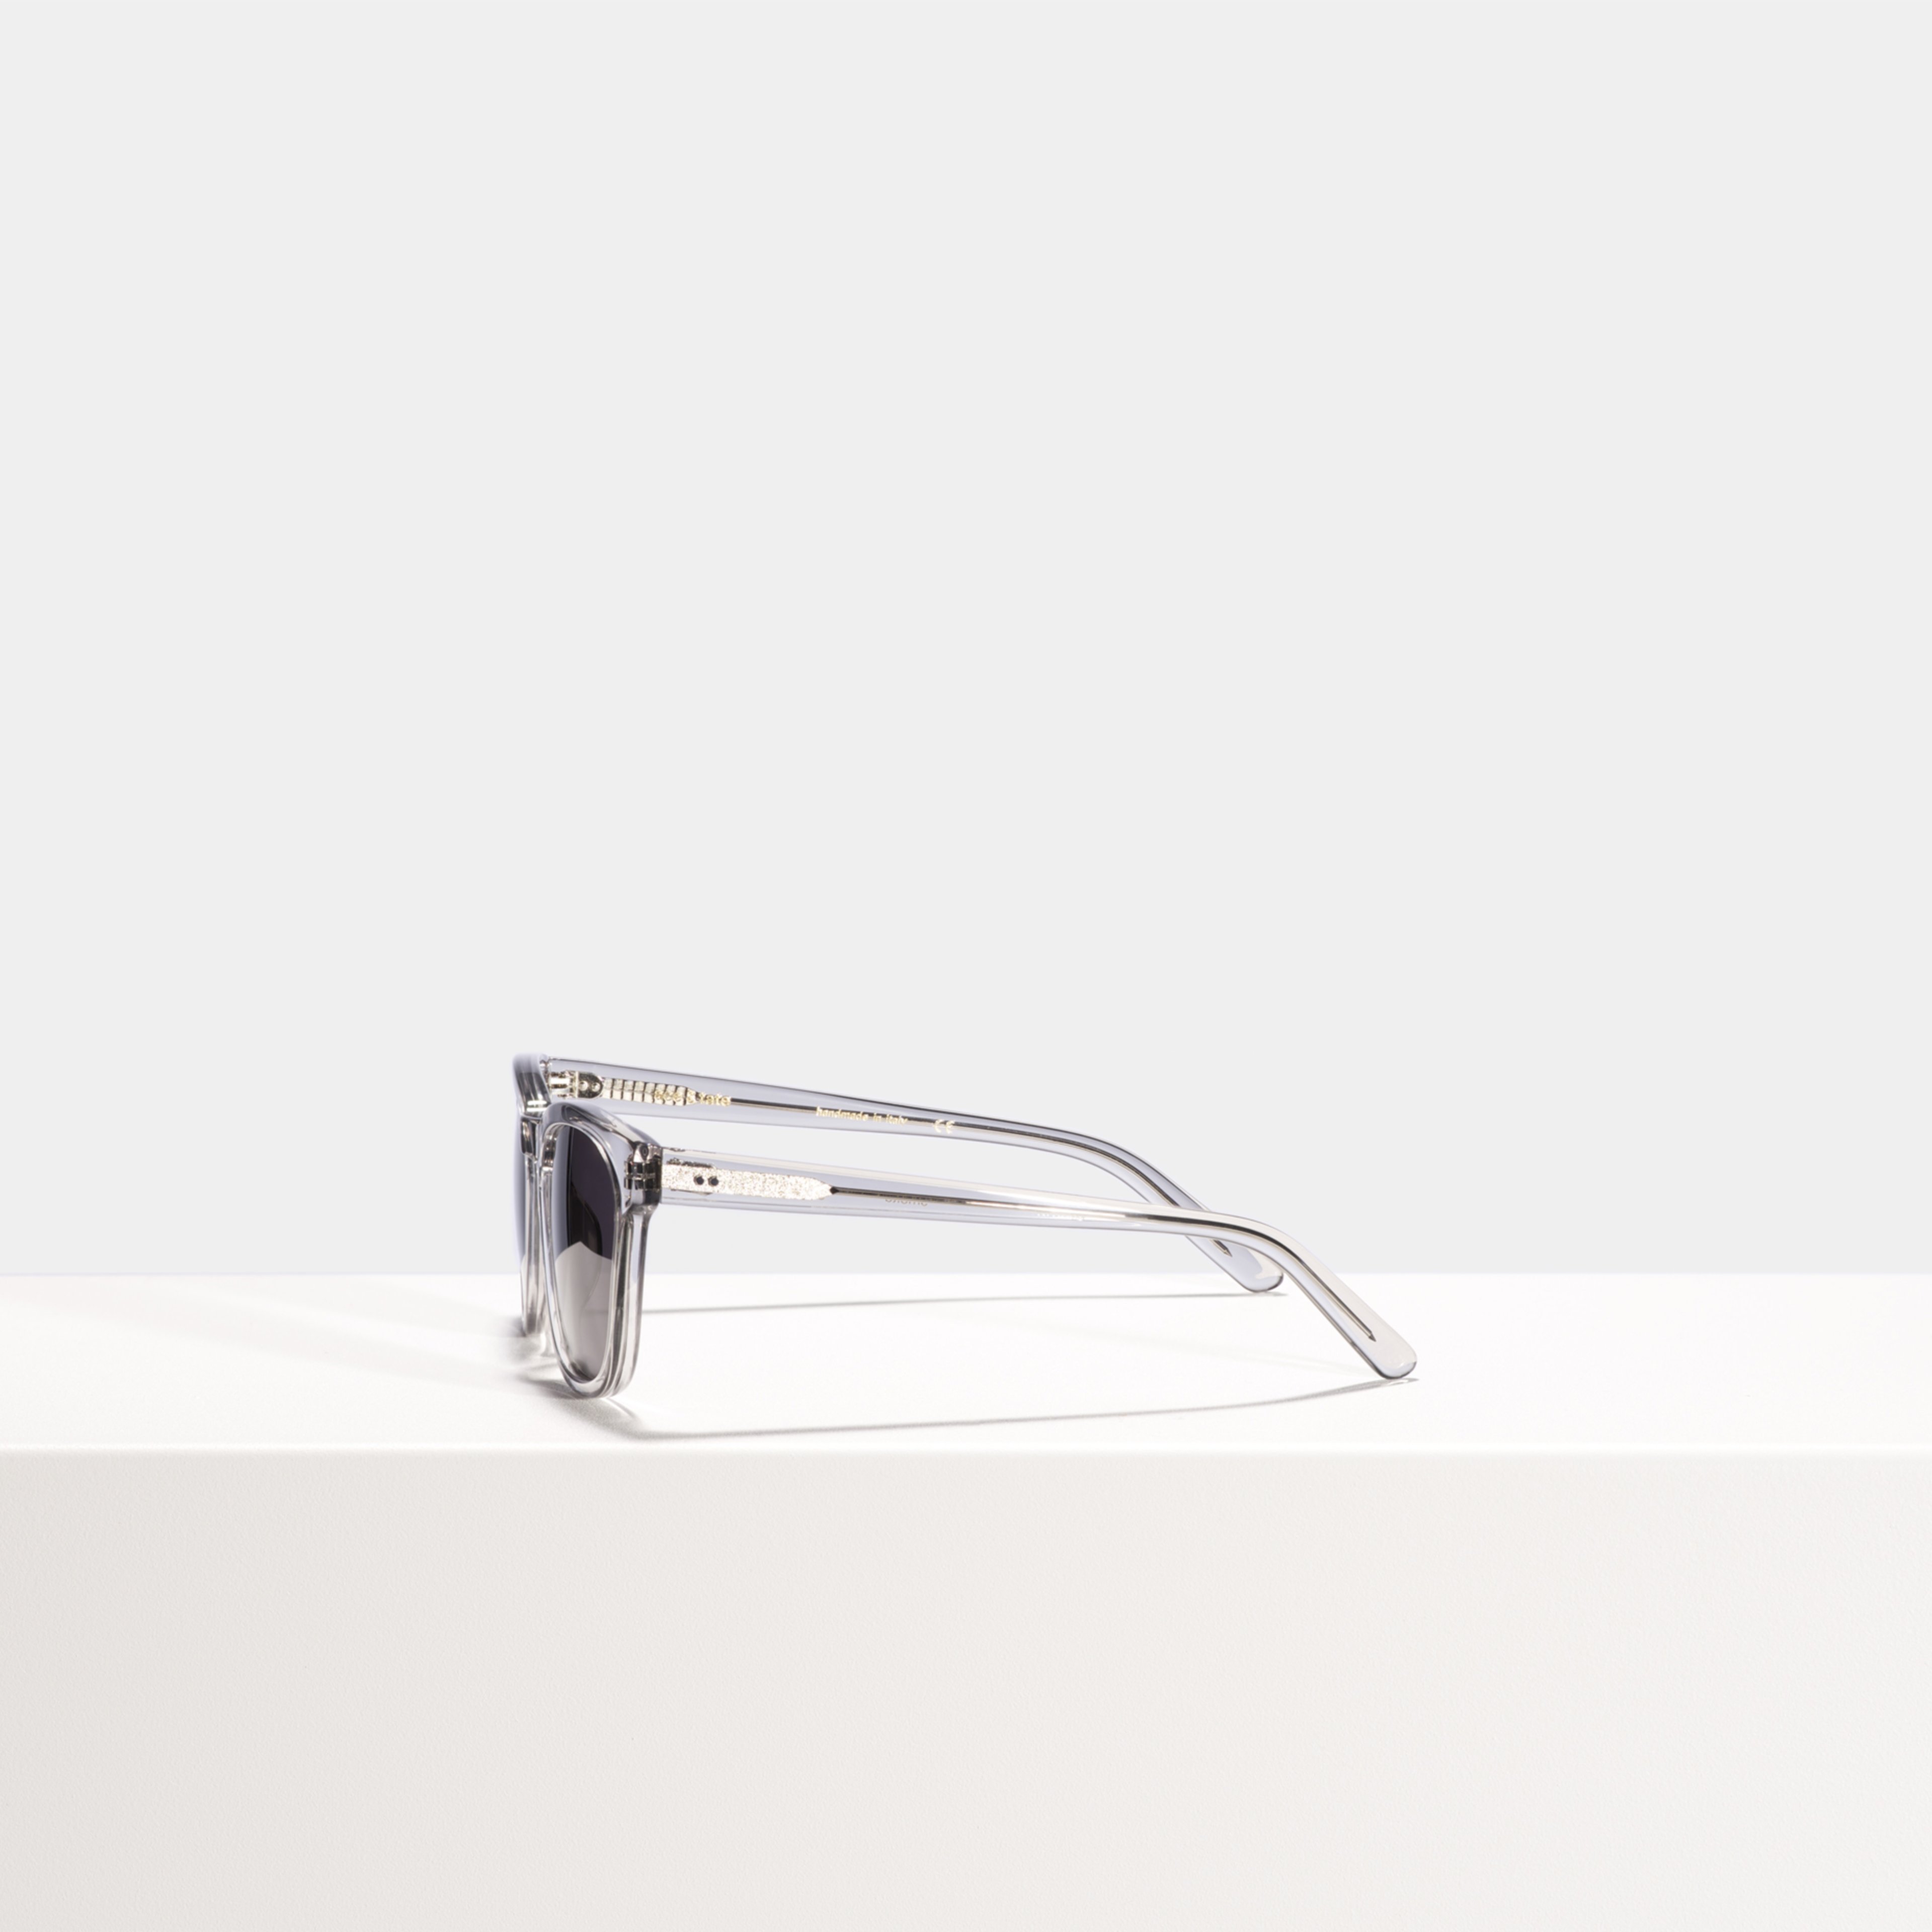 Ace & Tate Sonnenbrillen | Quadratisch Acetat in Transparent, Grau